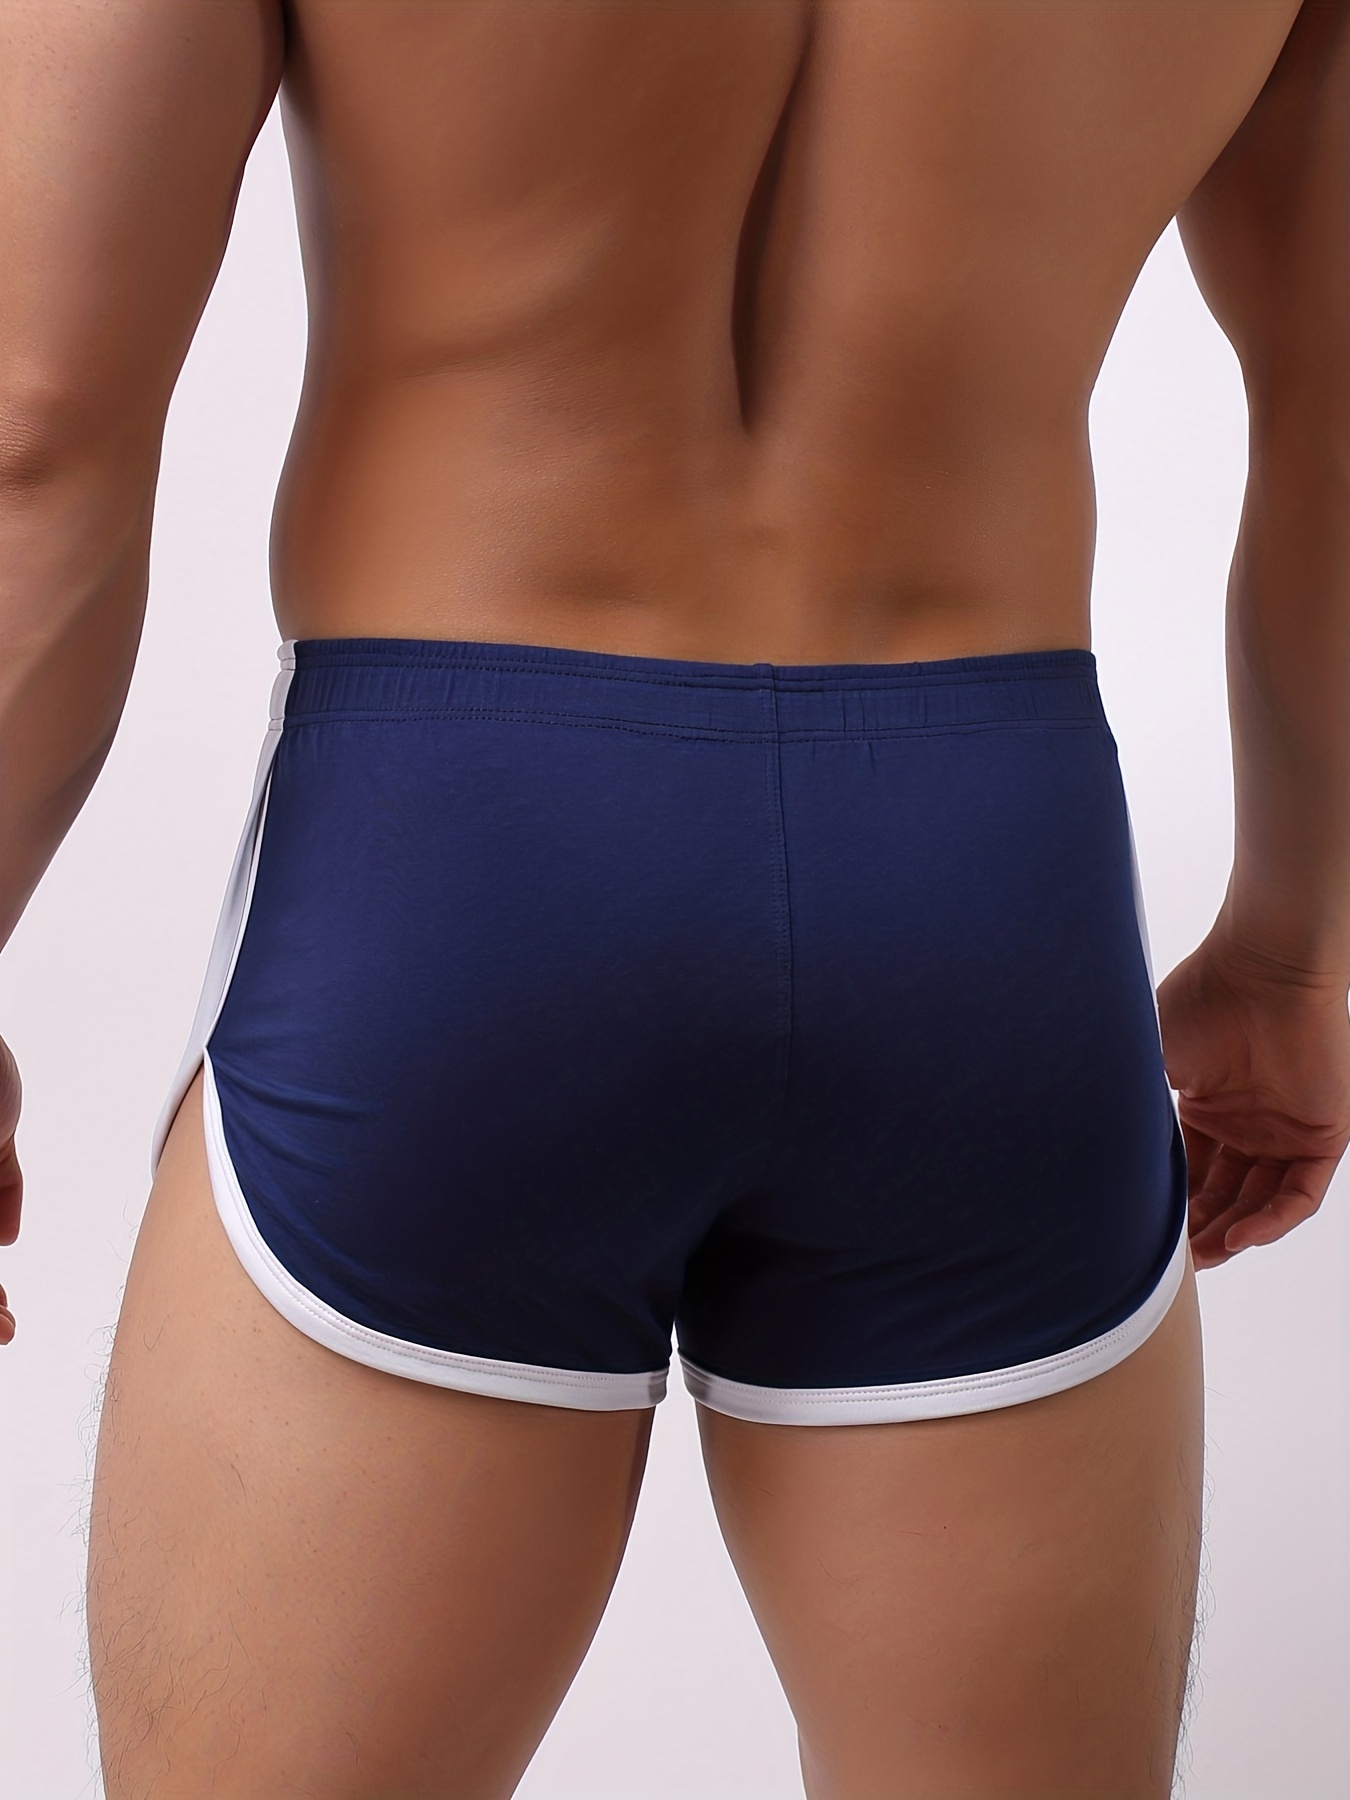 Men's Underwear, Men's Fashion Tight Breathable Thin Sports Shorts, Cotton  Comfortable Boxers Briefs